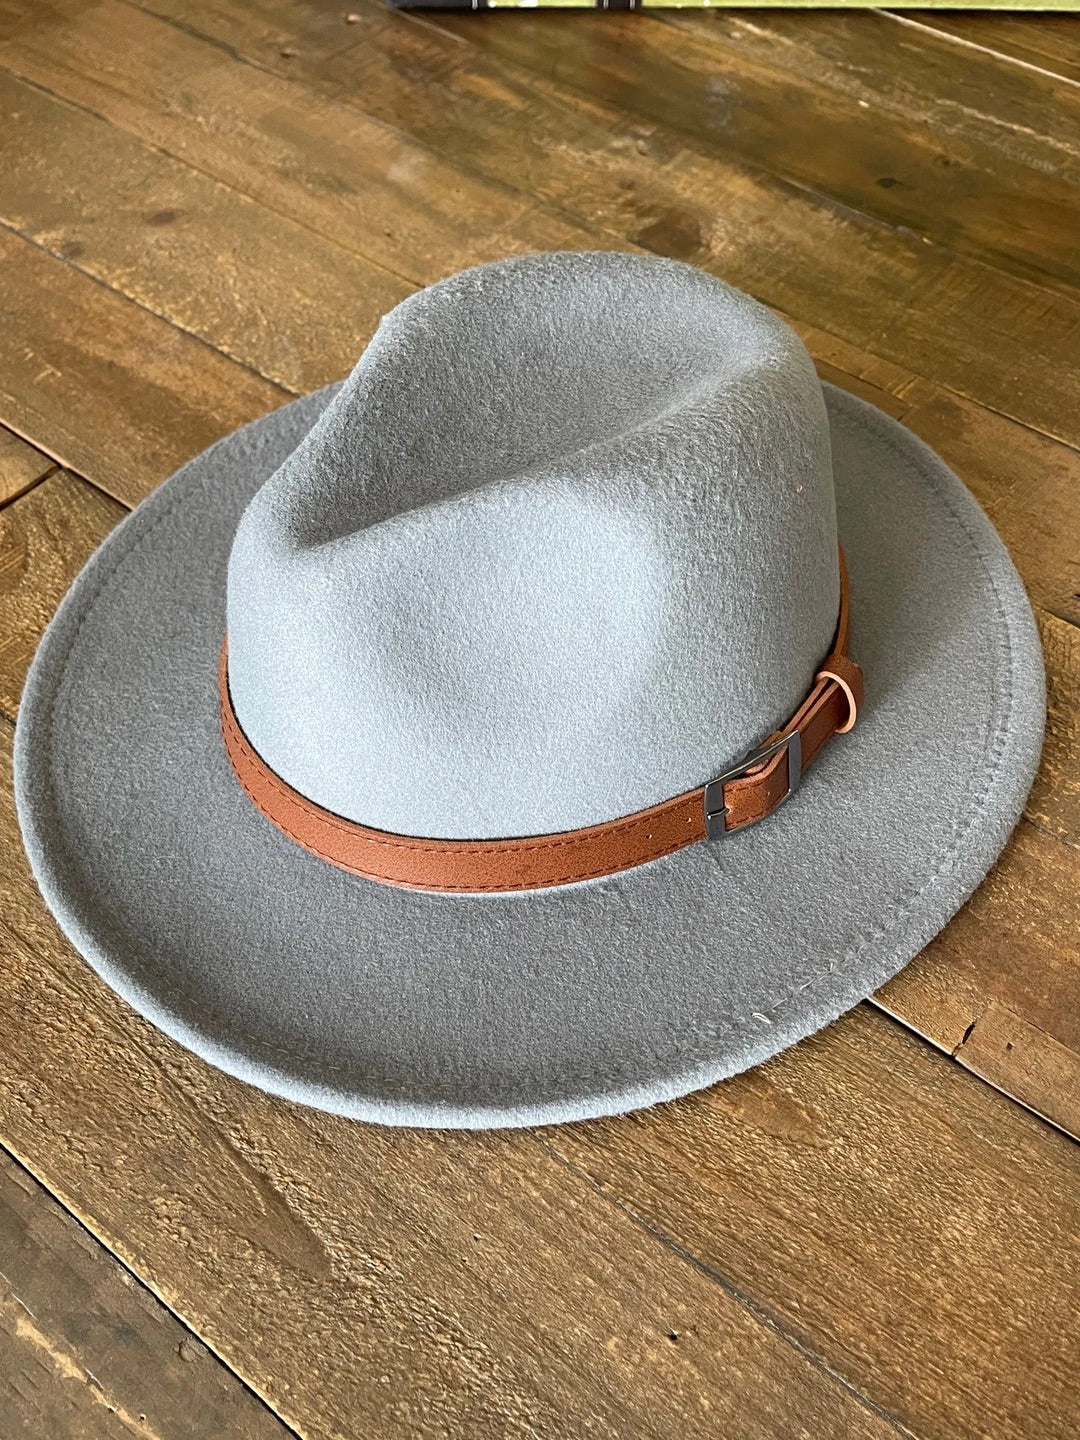 Belted Fedora Hat